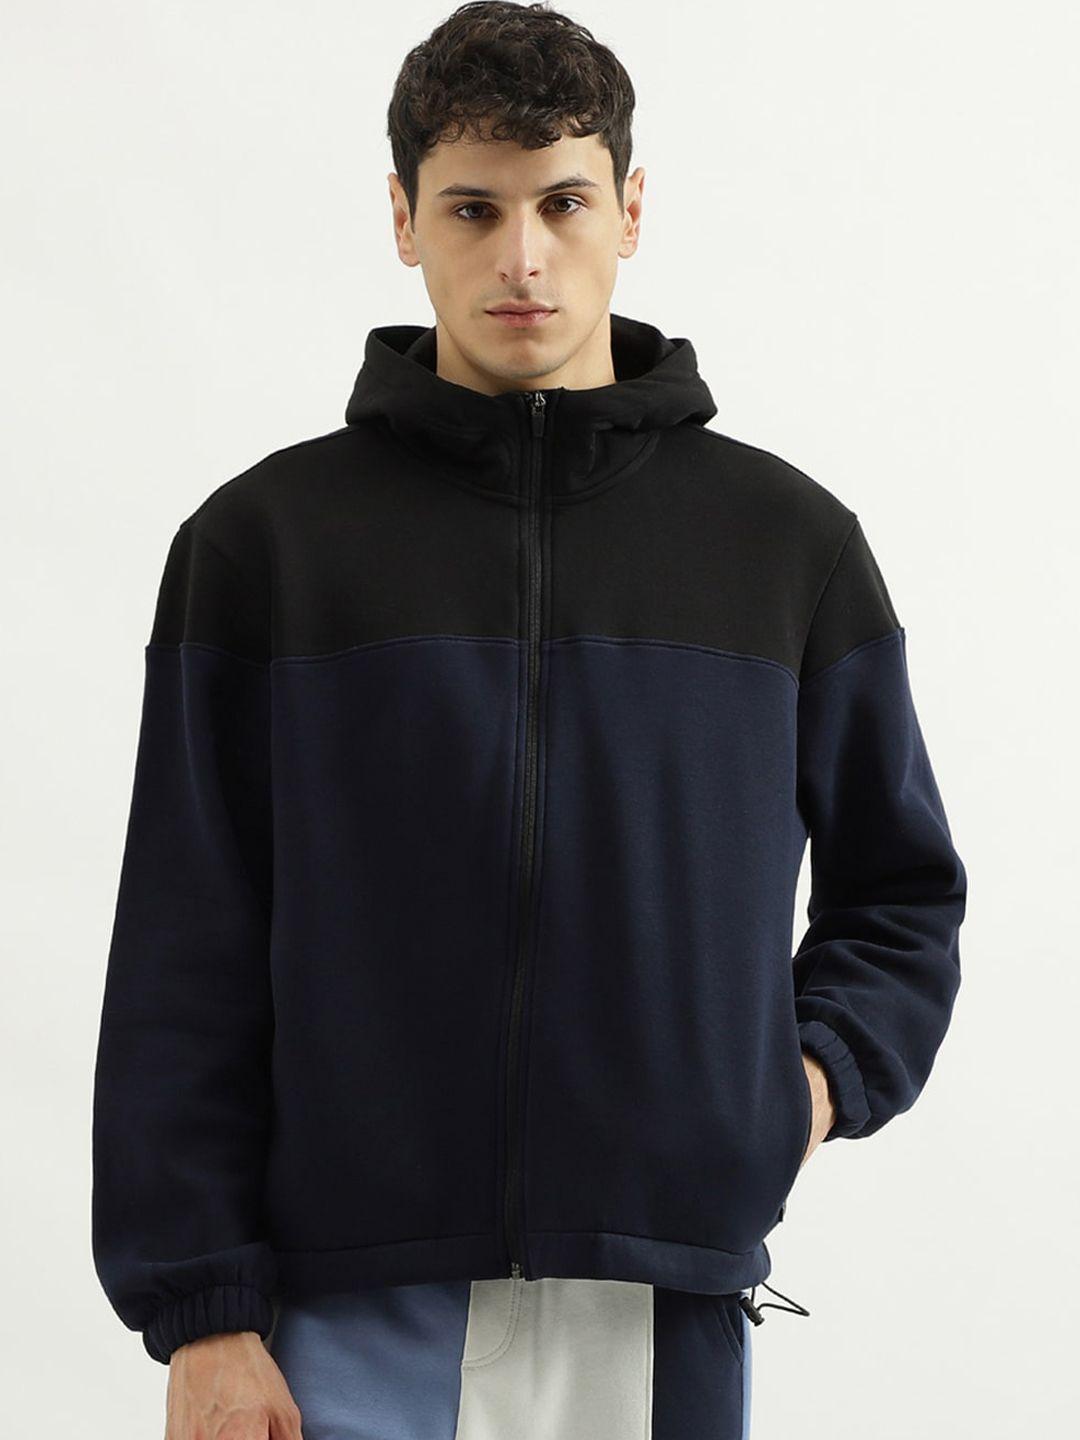 united-colors-of-benetton-colourblocked-cotton-hooded-front-open-sweatshirt